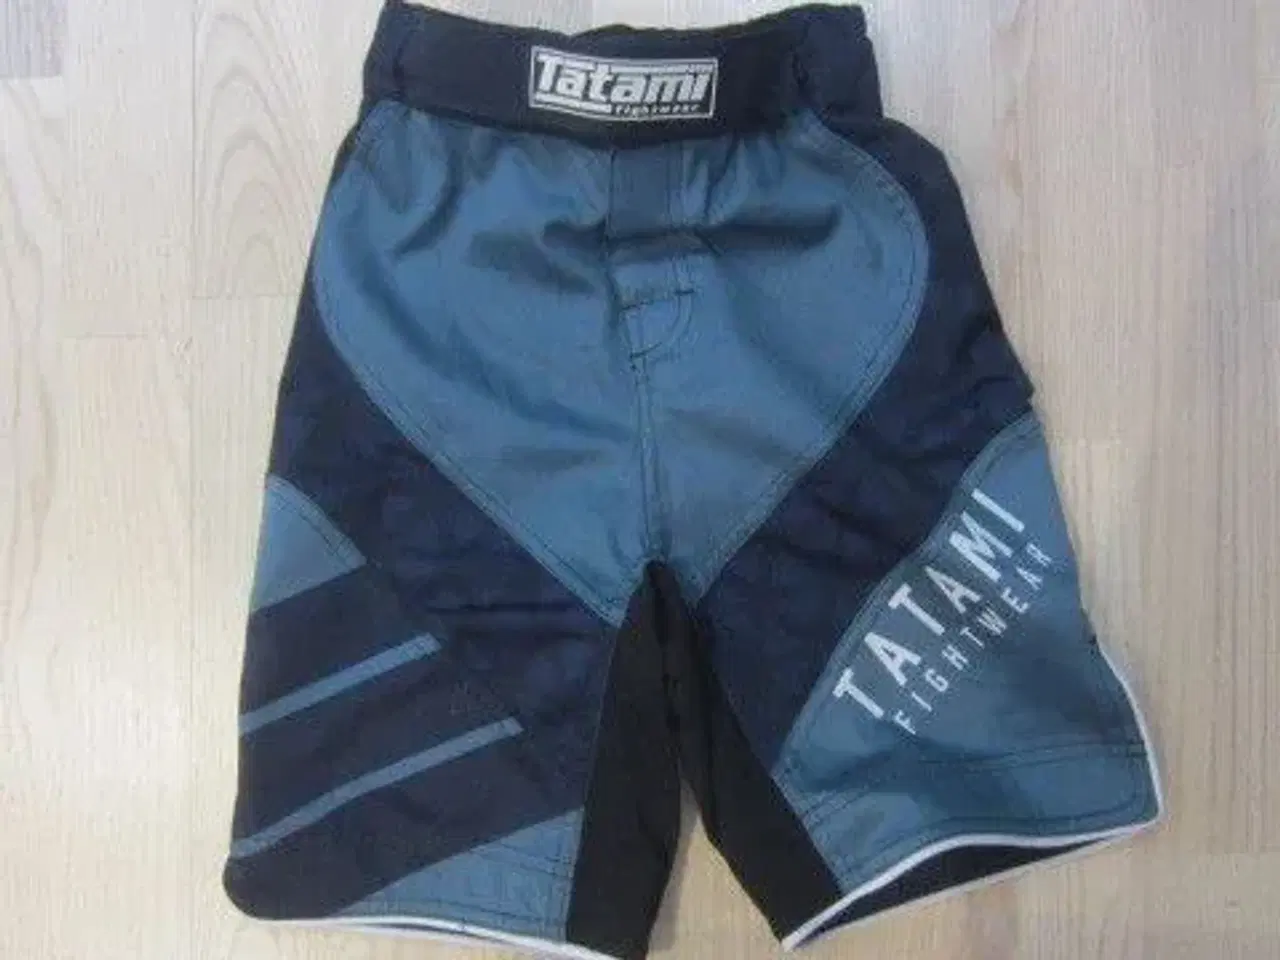 Billede 1 - Str. 6 år, TATAMI fightwear shorts